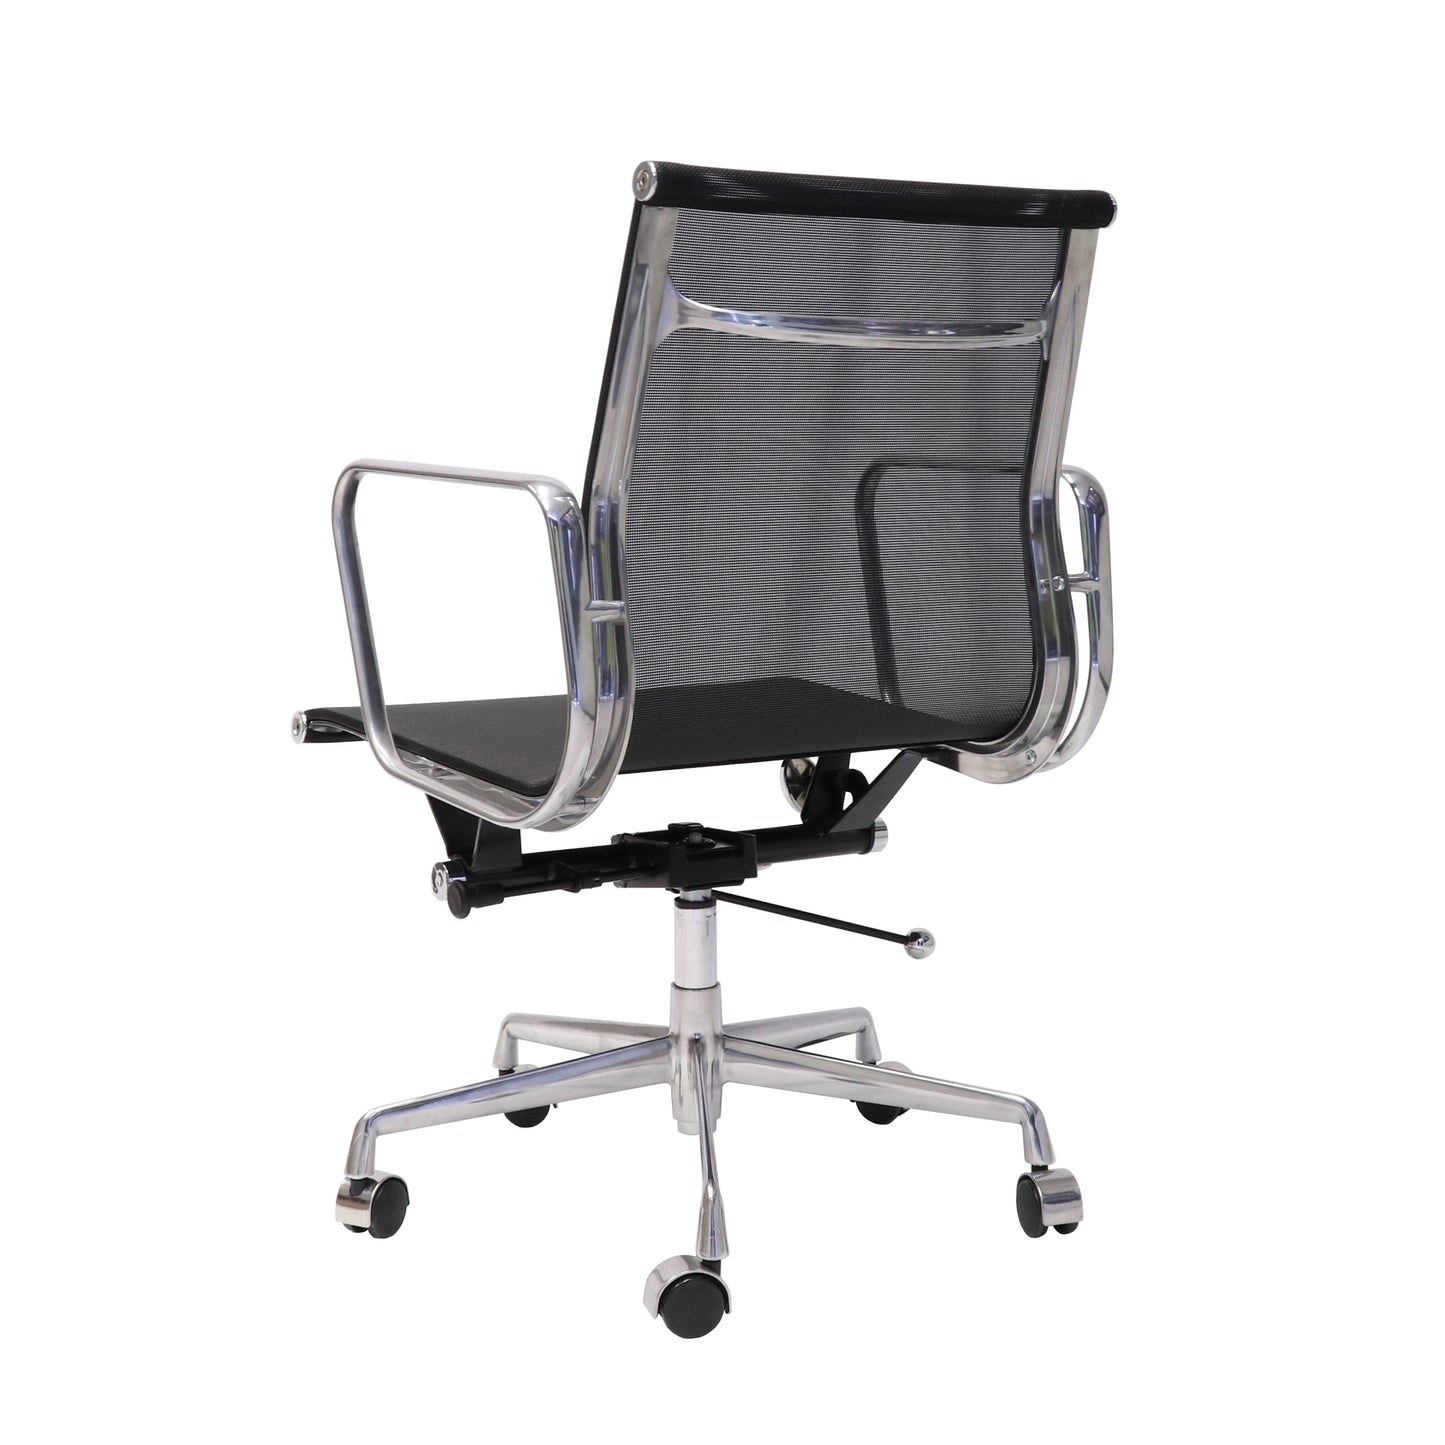 ErgoLuxe SB Office Chair